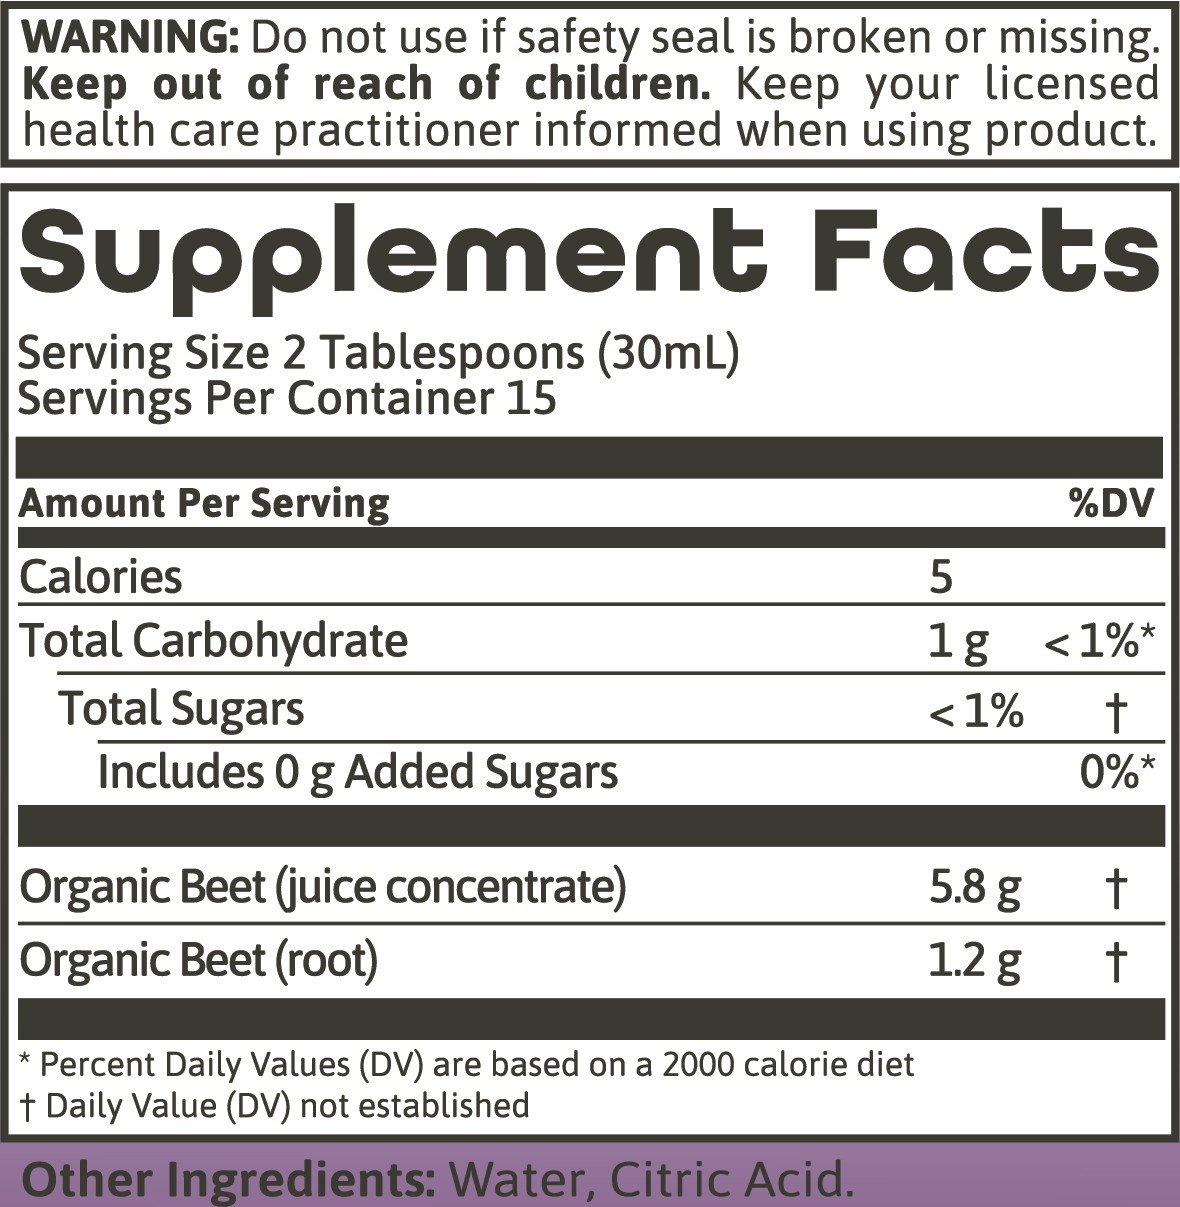 Dynamic Health Beetroot Juice Certified Organic 16 oz Liquid